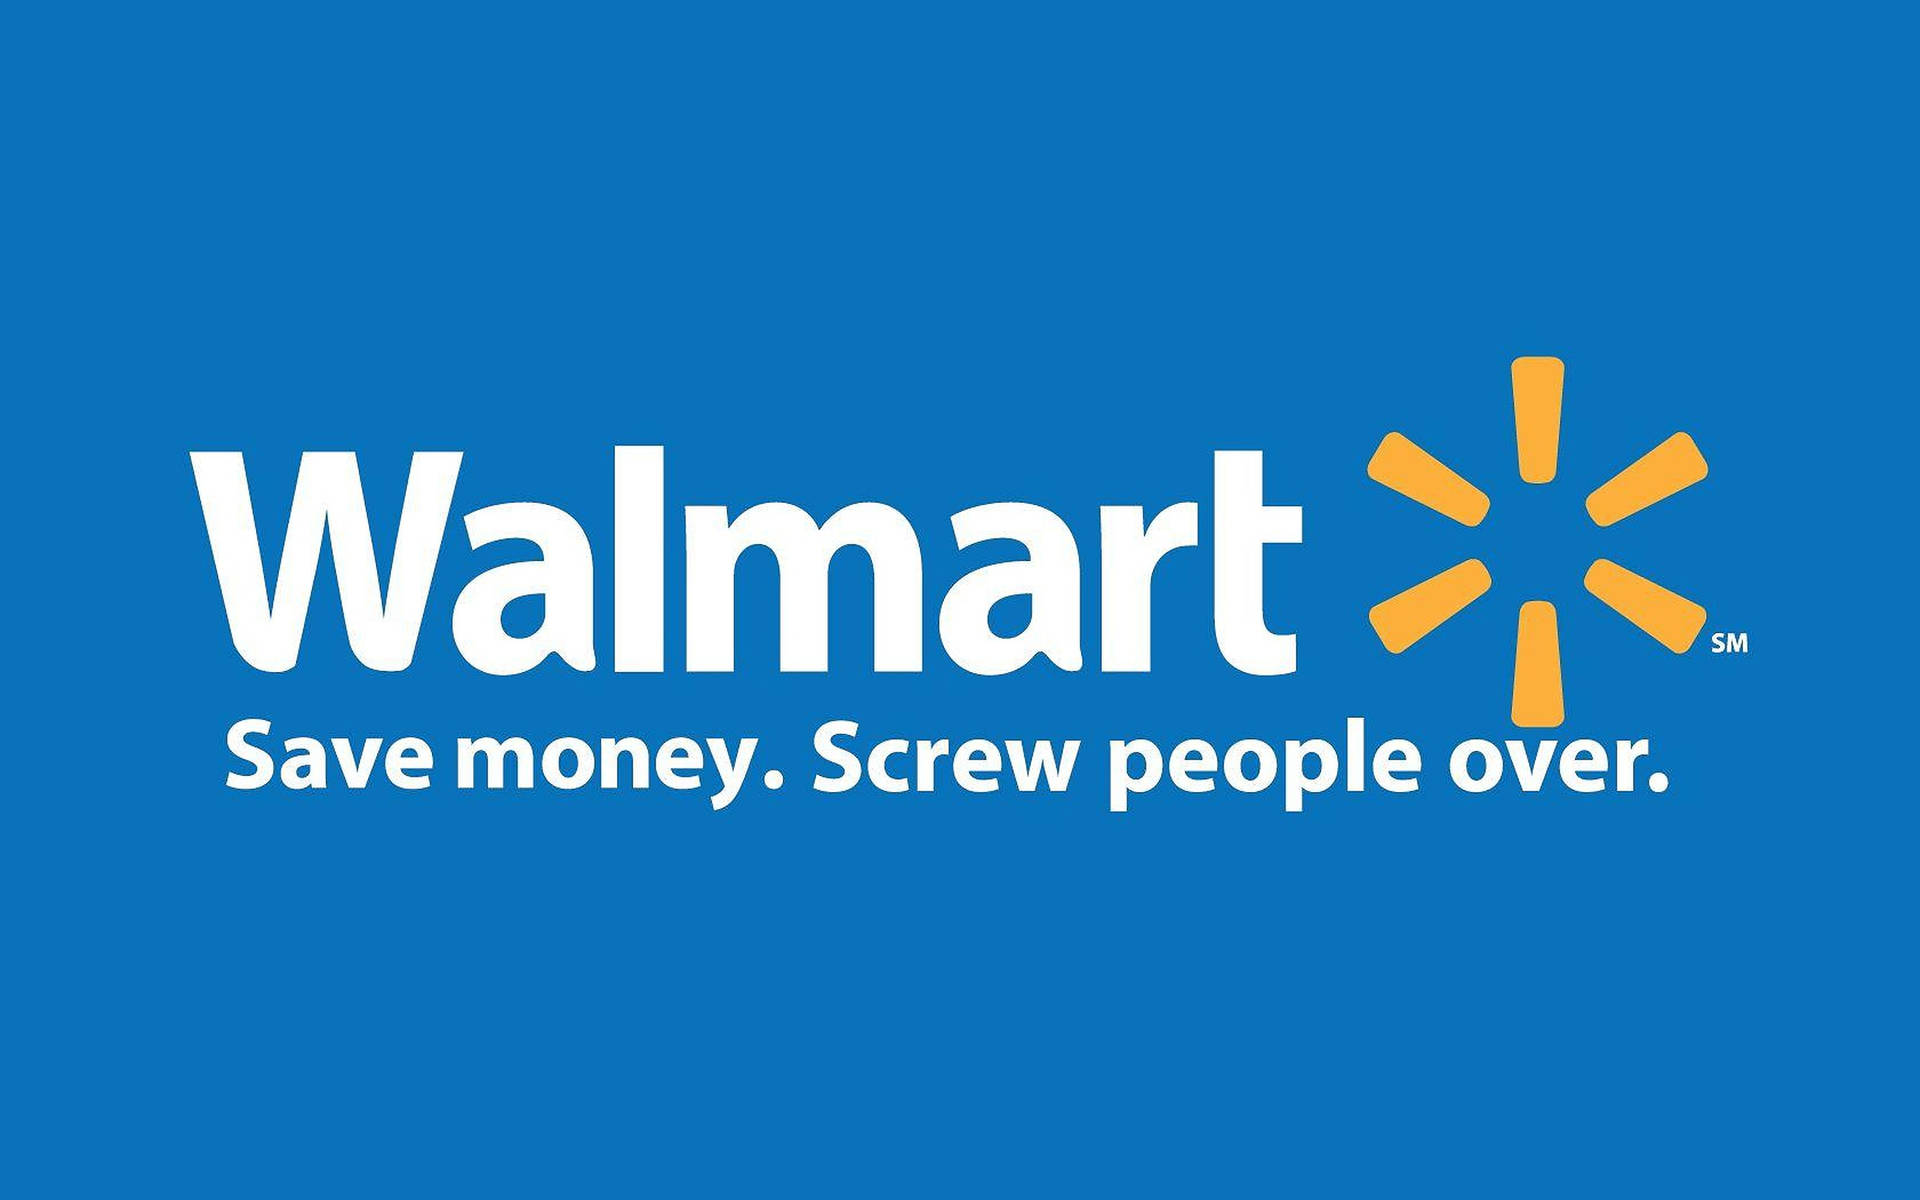 Walmart Parody Slogan